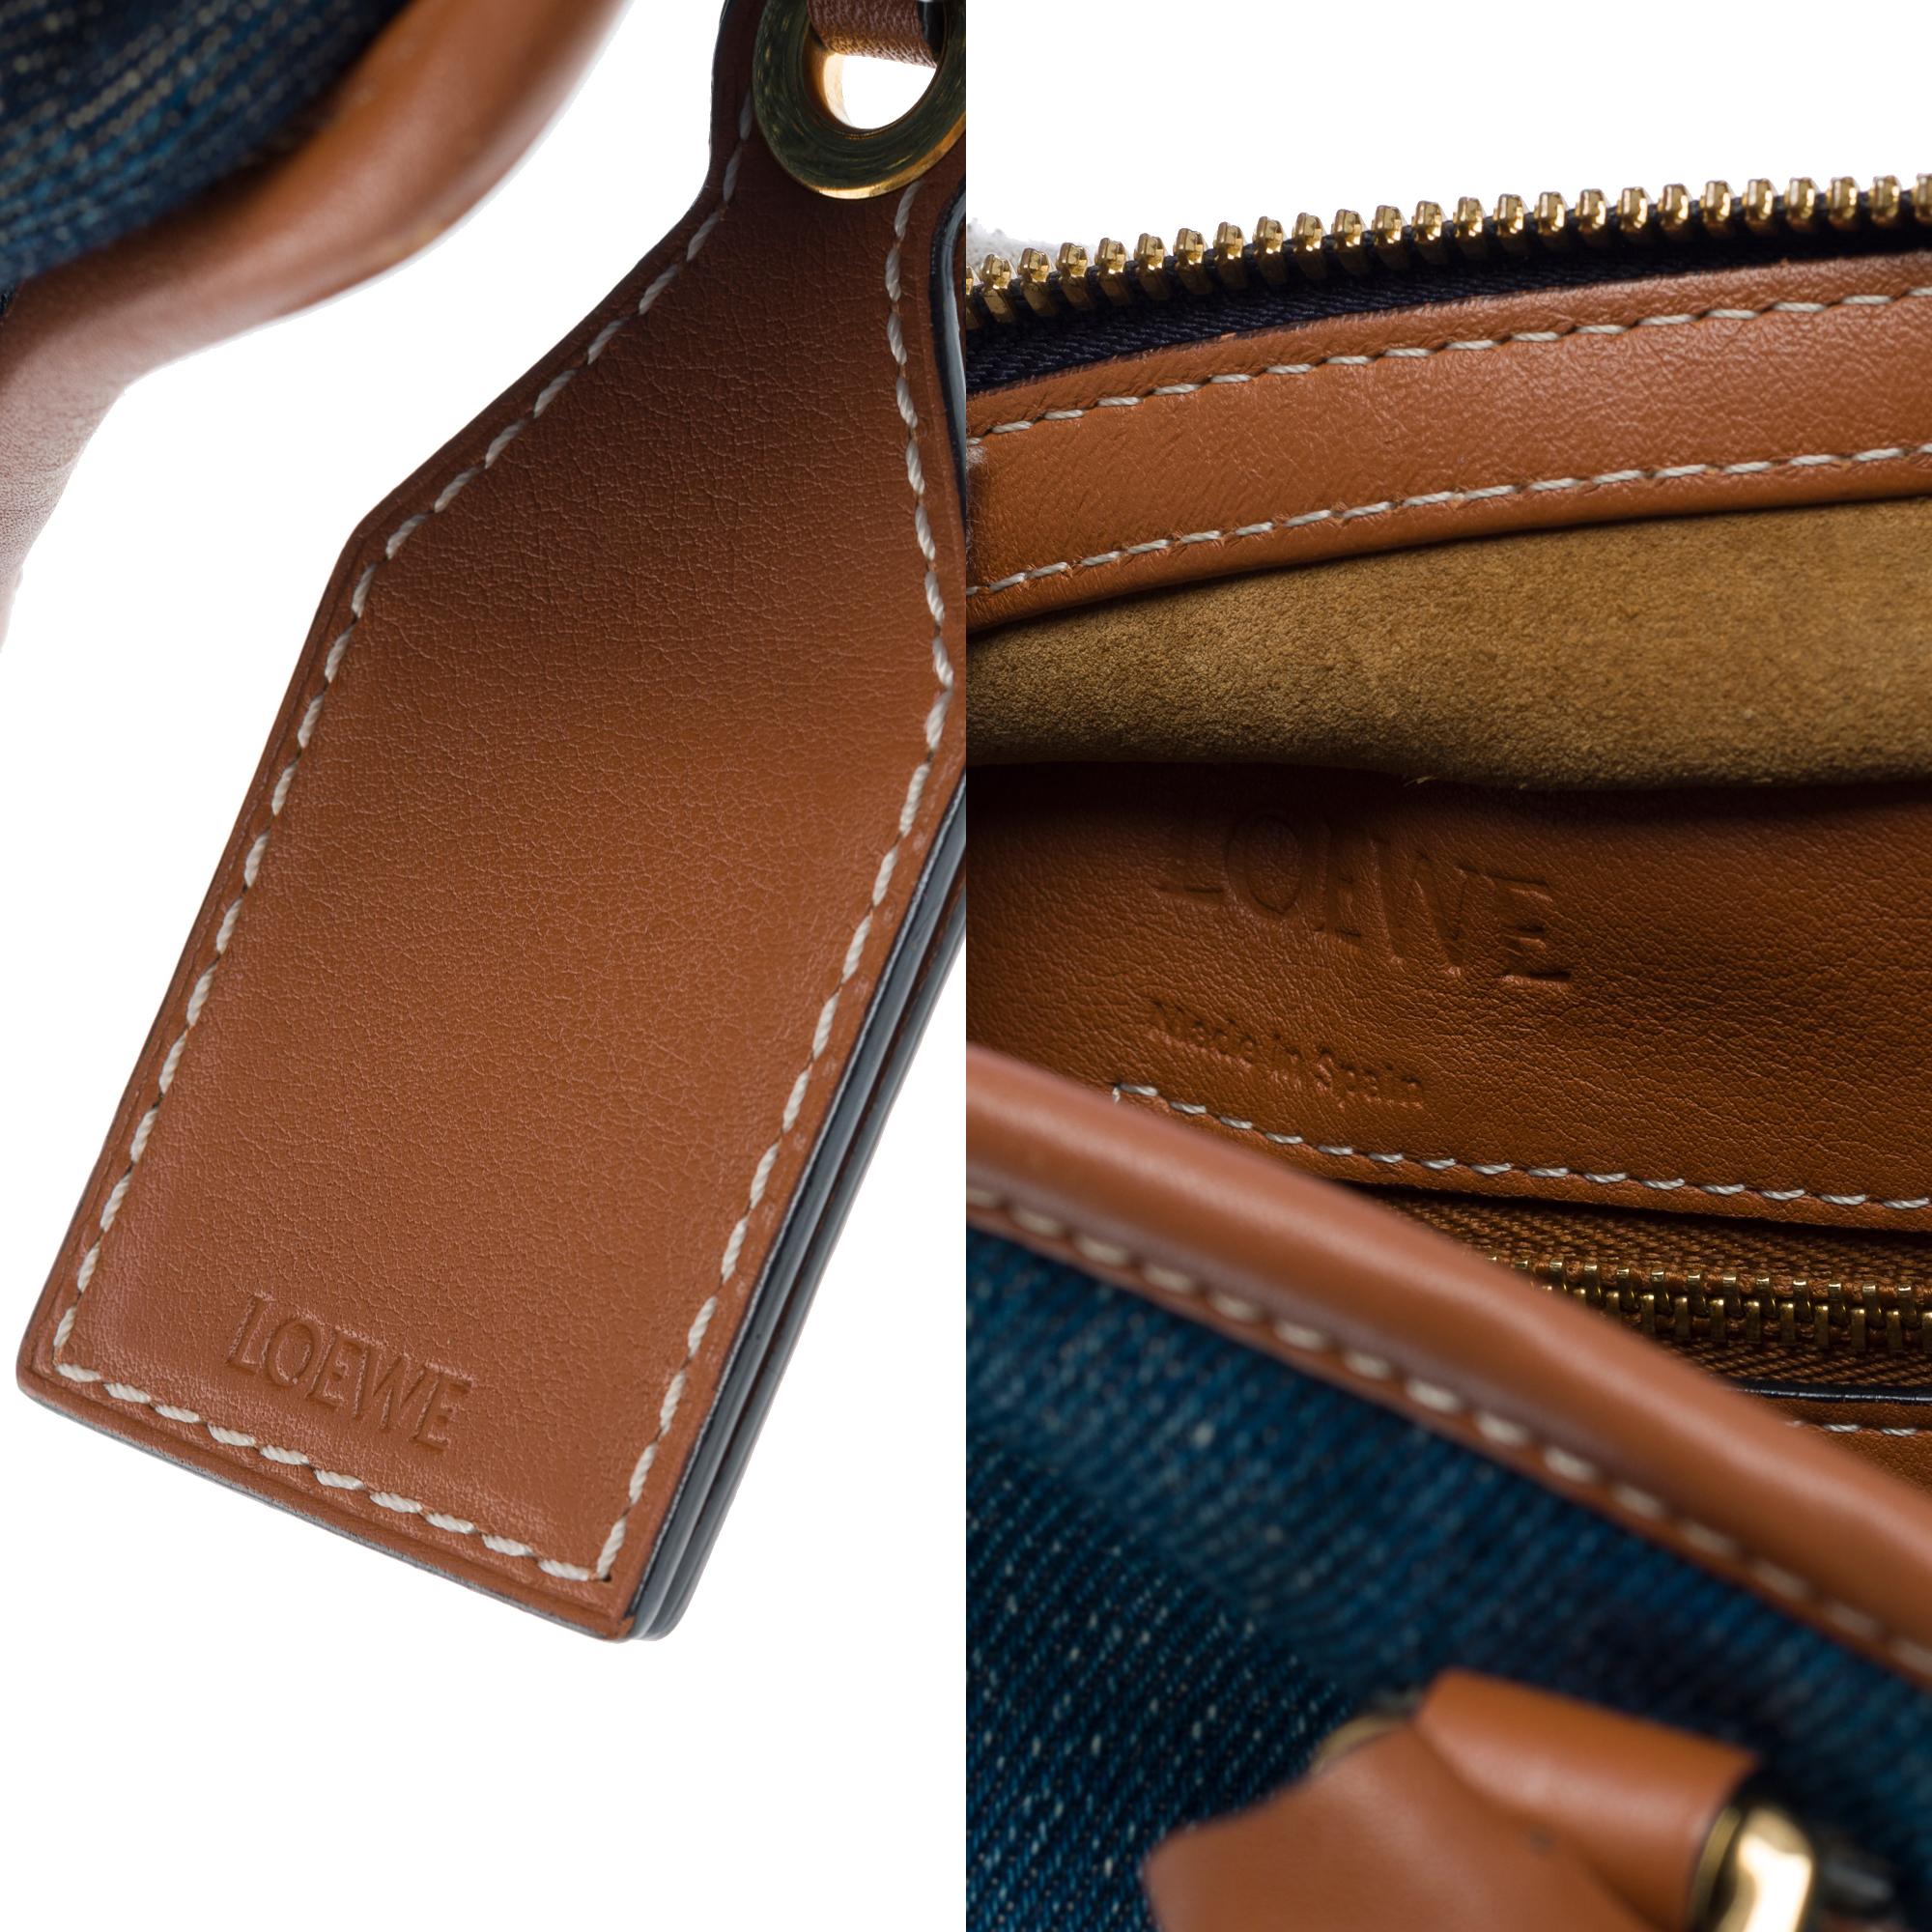 Loewe Amazona 23 2 Way handbag in denim and brown leather, GHW 3